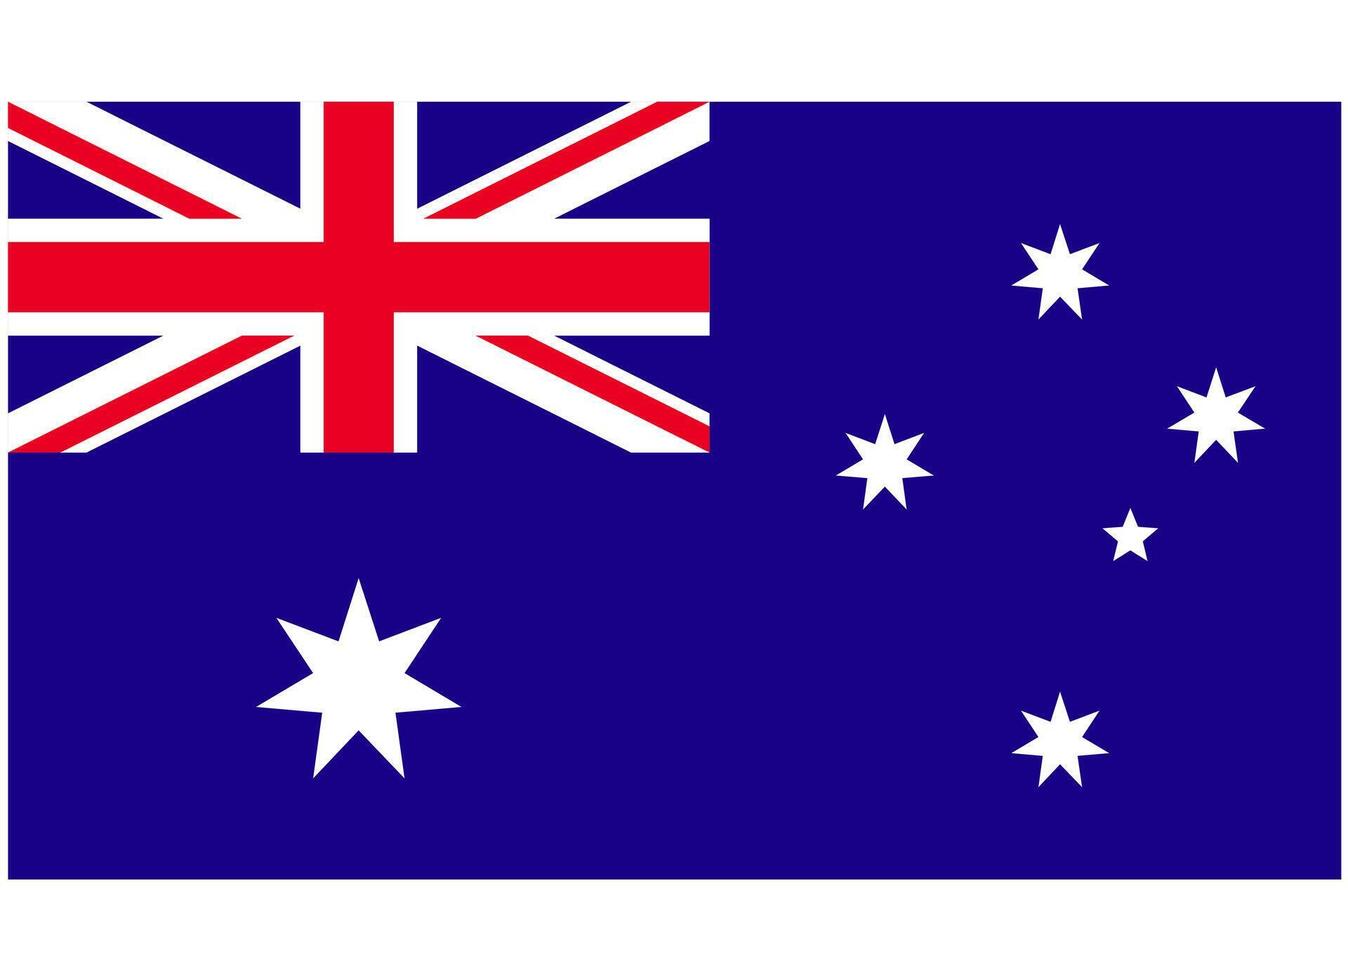 AUSTRALIA National Flag vector